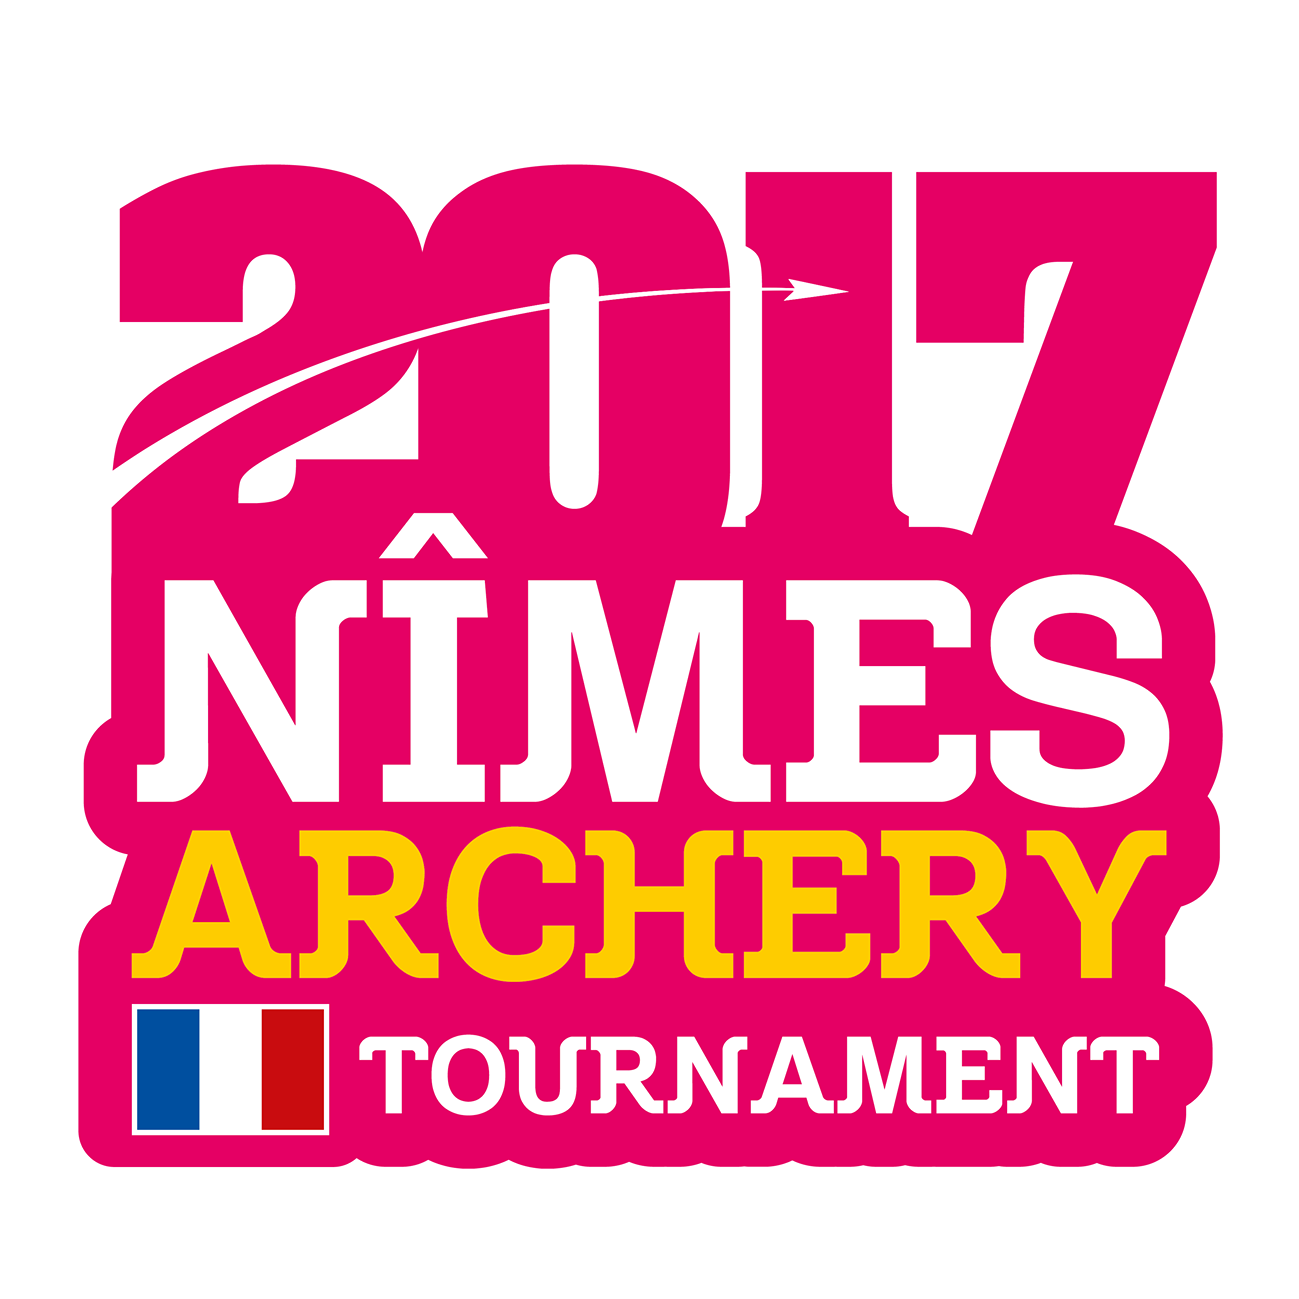 World Archery Shop will be present in Nîmes Archery Tournament.